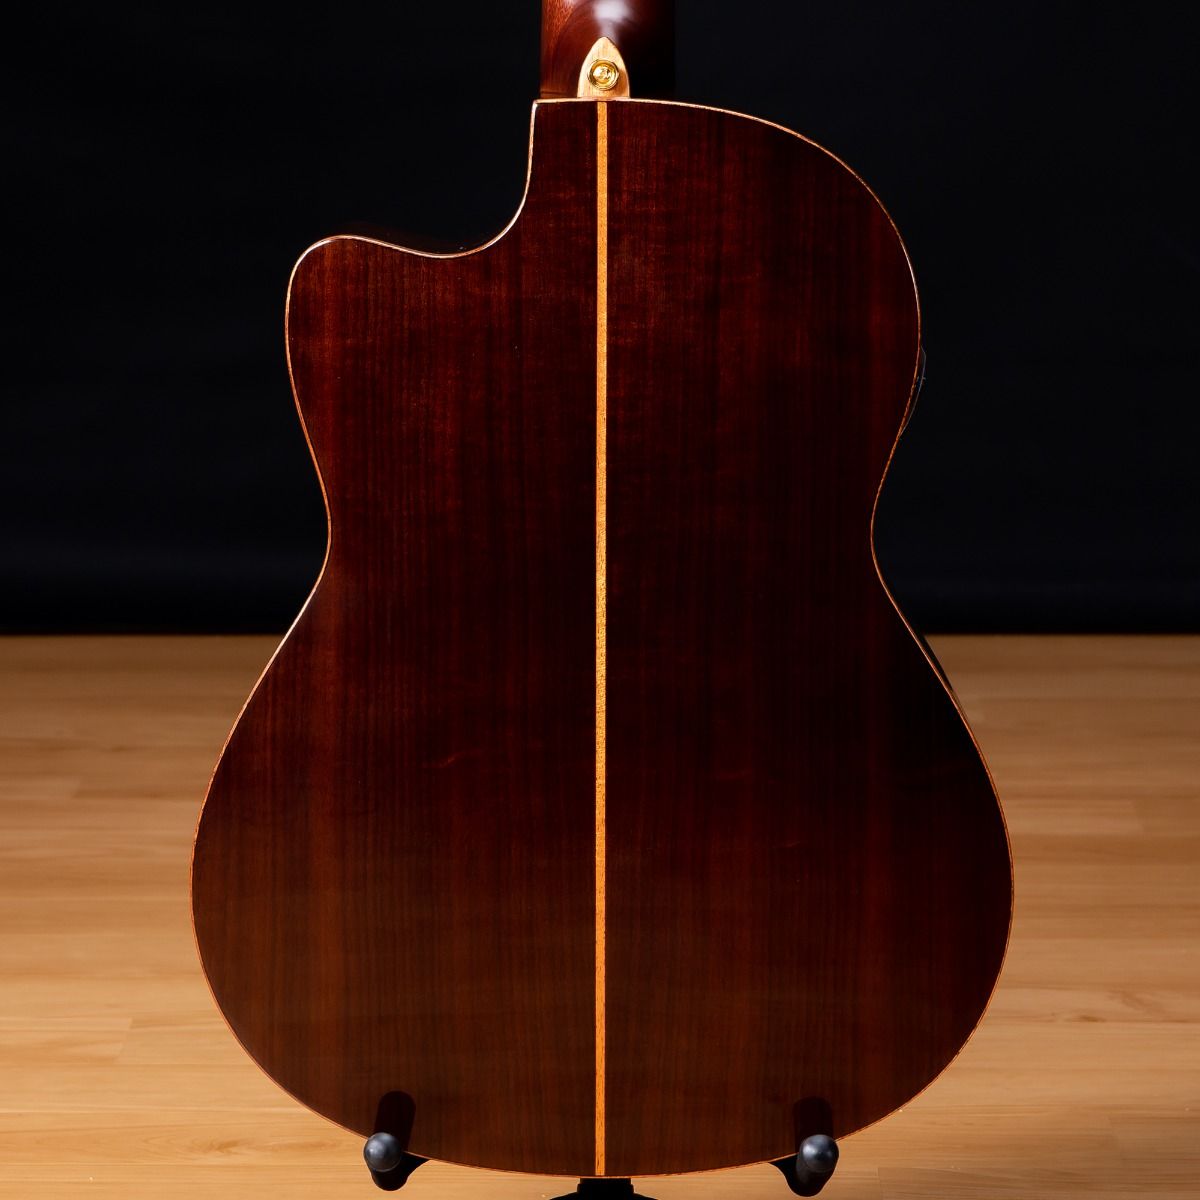 Yamaha Ncx5 Classical Acoustic-Electric Guitar - Natural Sn Iim414a